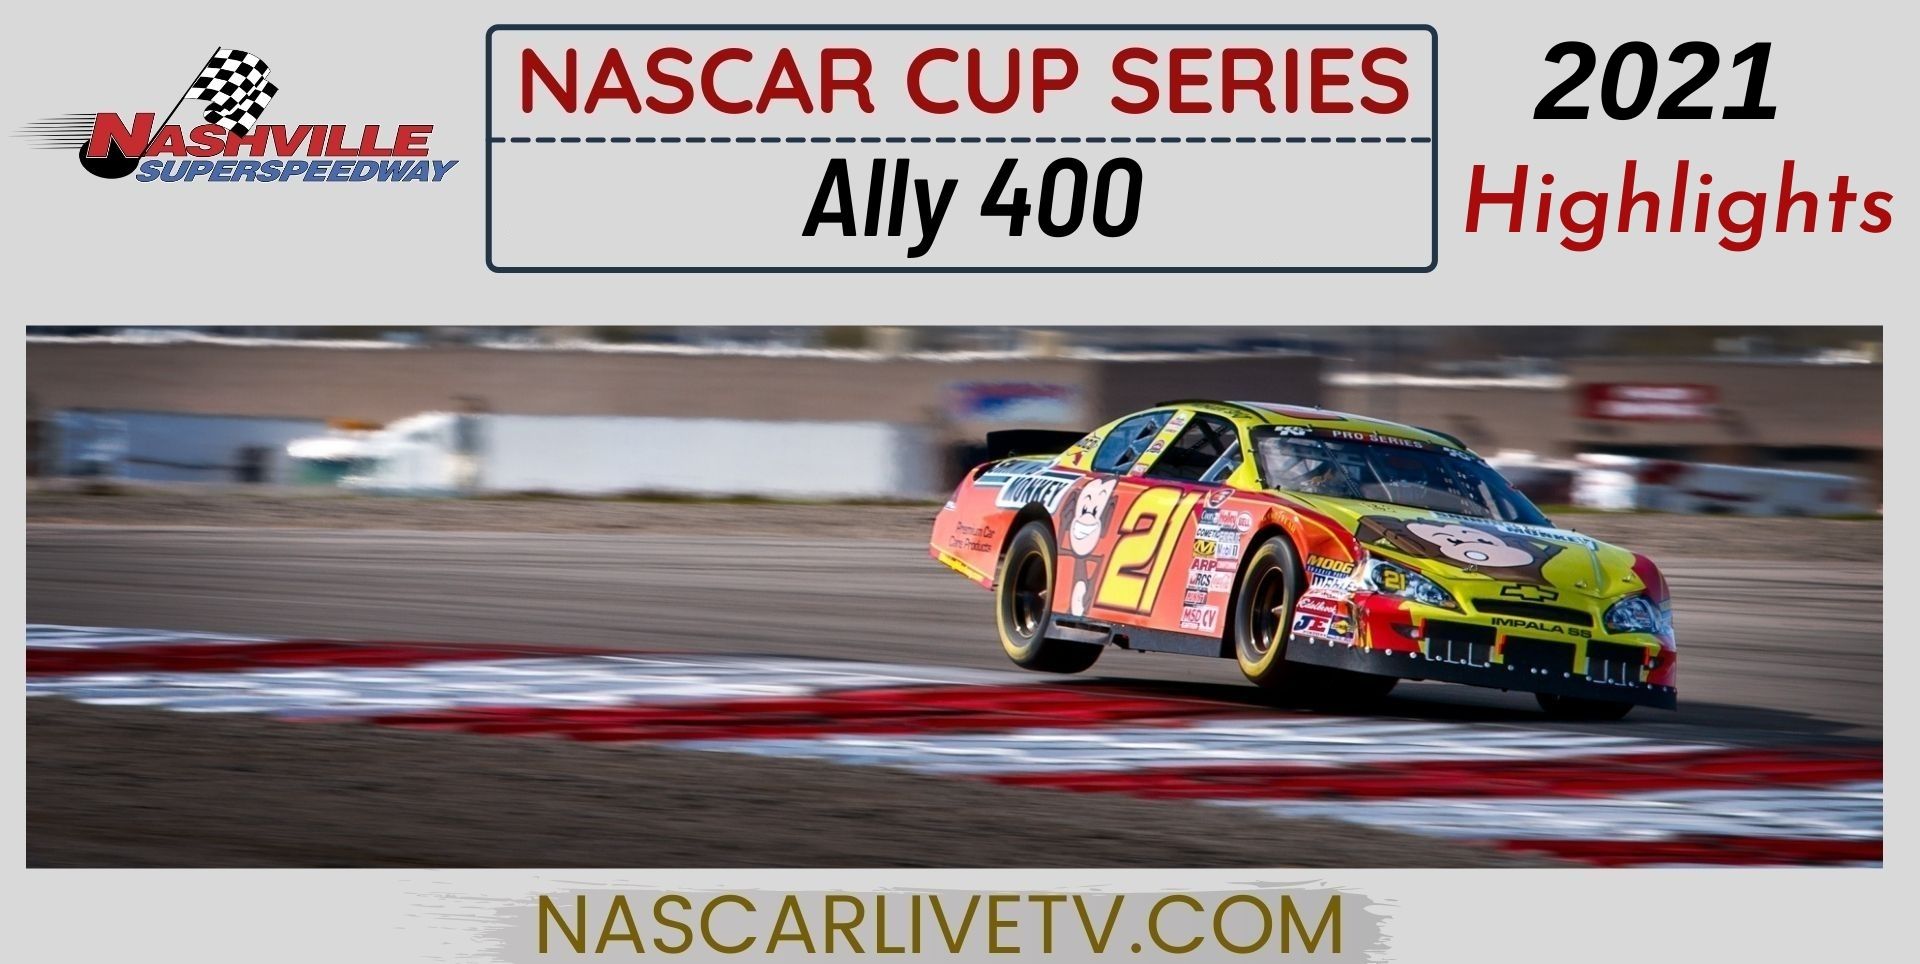 Ally 400 Highlights NASCAR Cup Series 2021